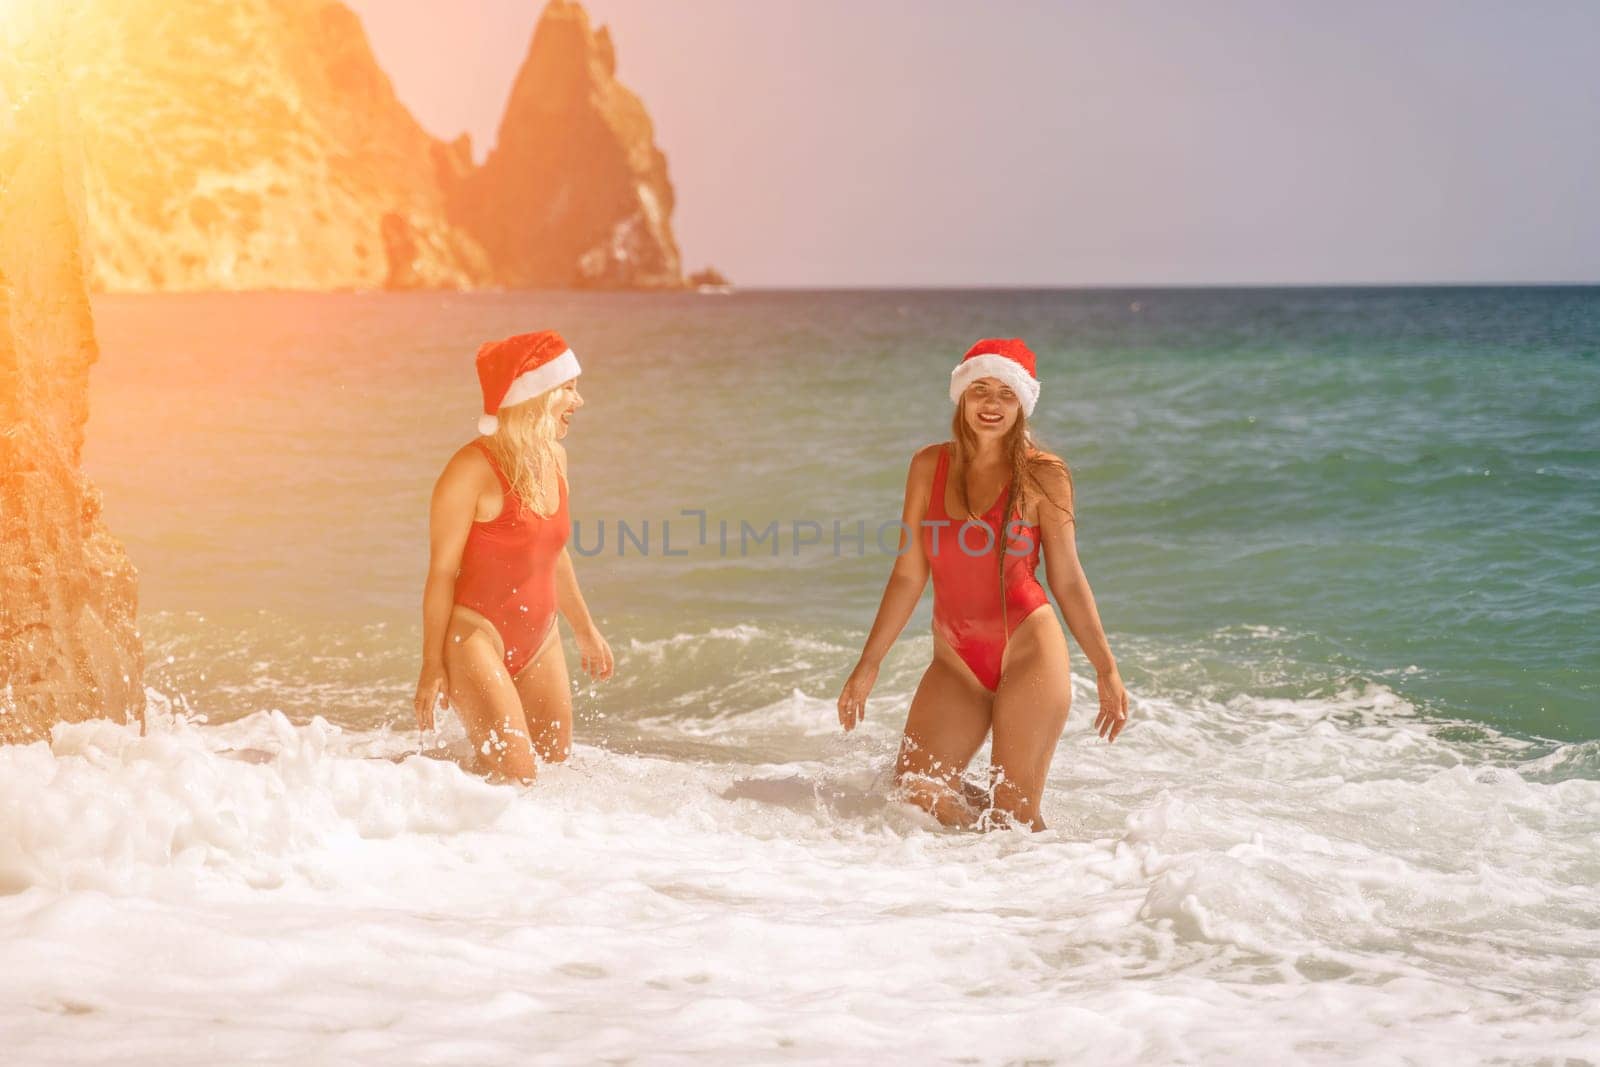 Women Santa hats ocean play. Seaside, beach daytime, enjoying beach fun. Two women in red swimsuits and Santa hats are enjoying themselves in the ocean waves. by Matiunina